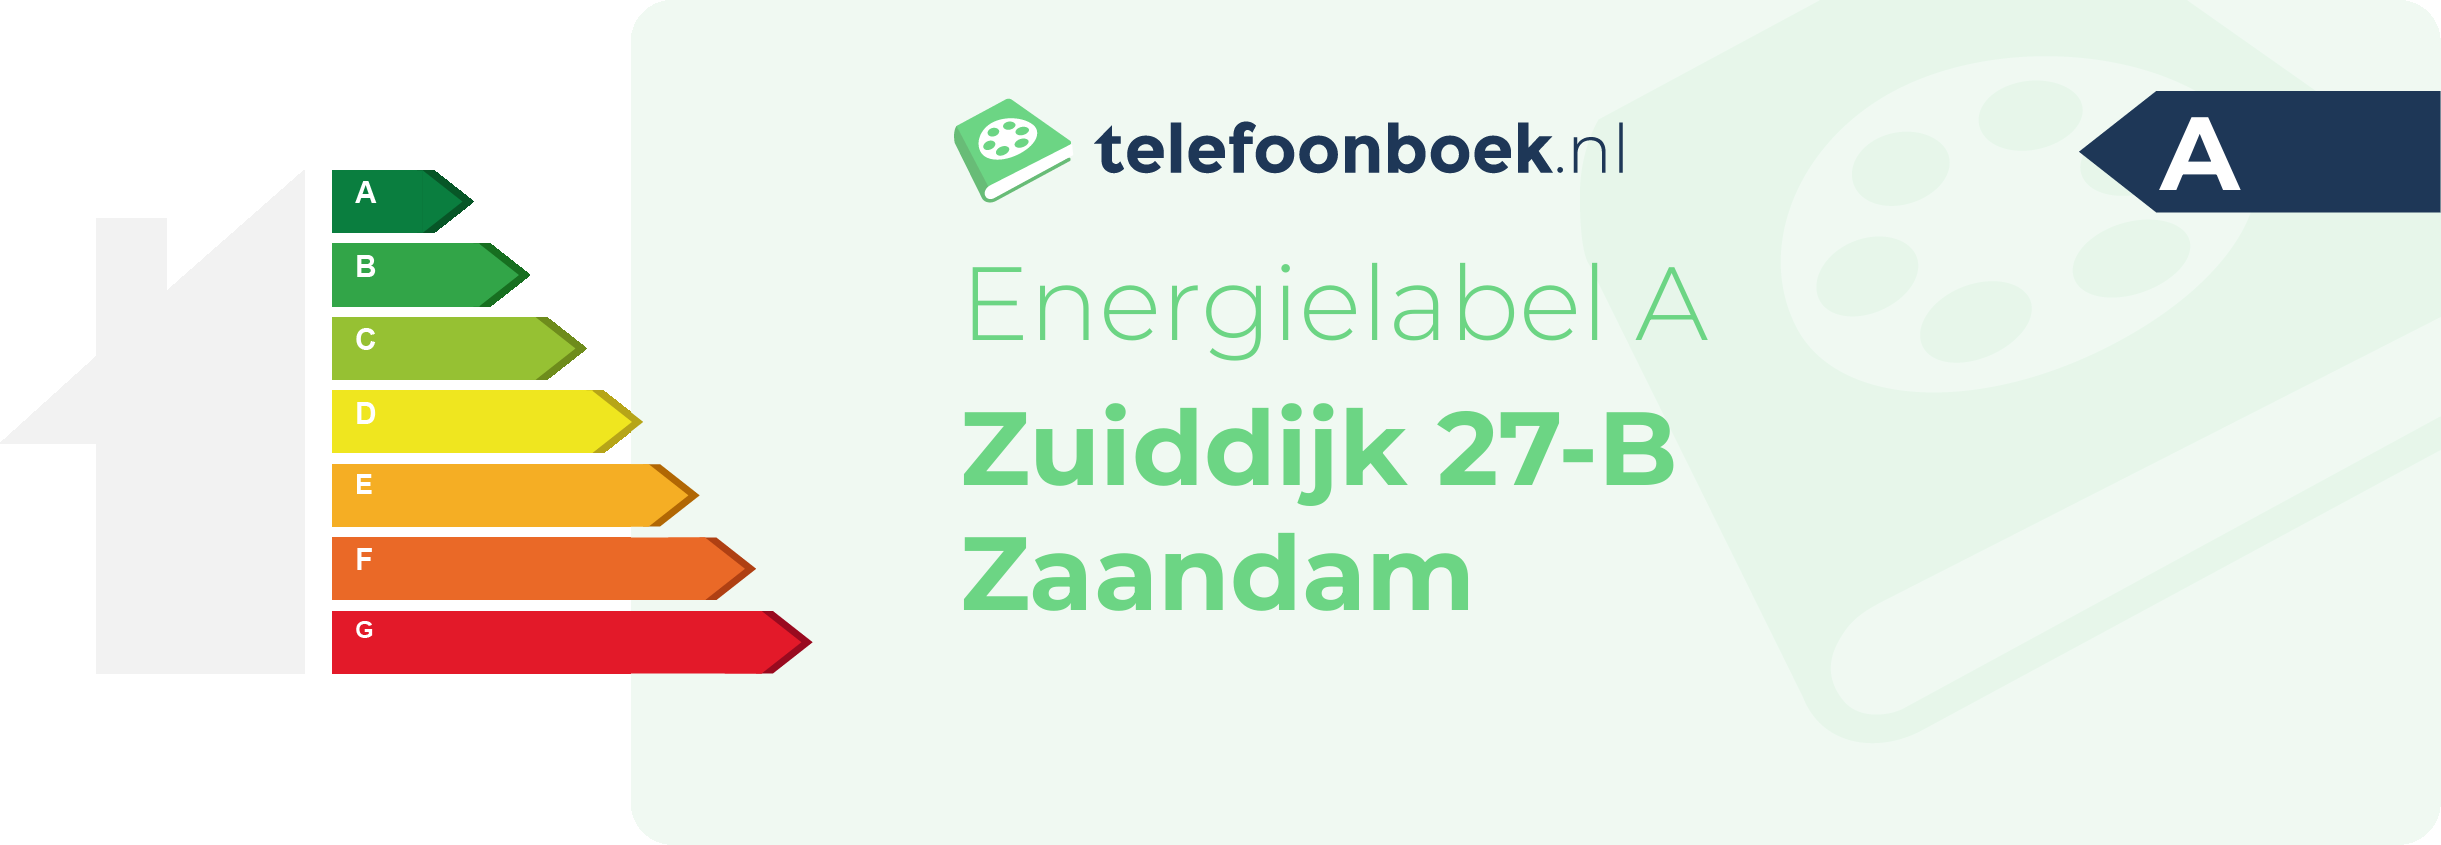 Energielabel Zuiddijk 27-B Zaandam